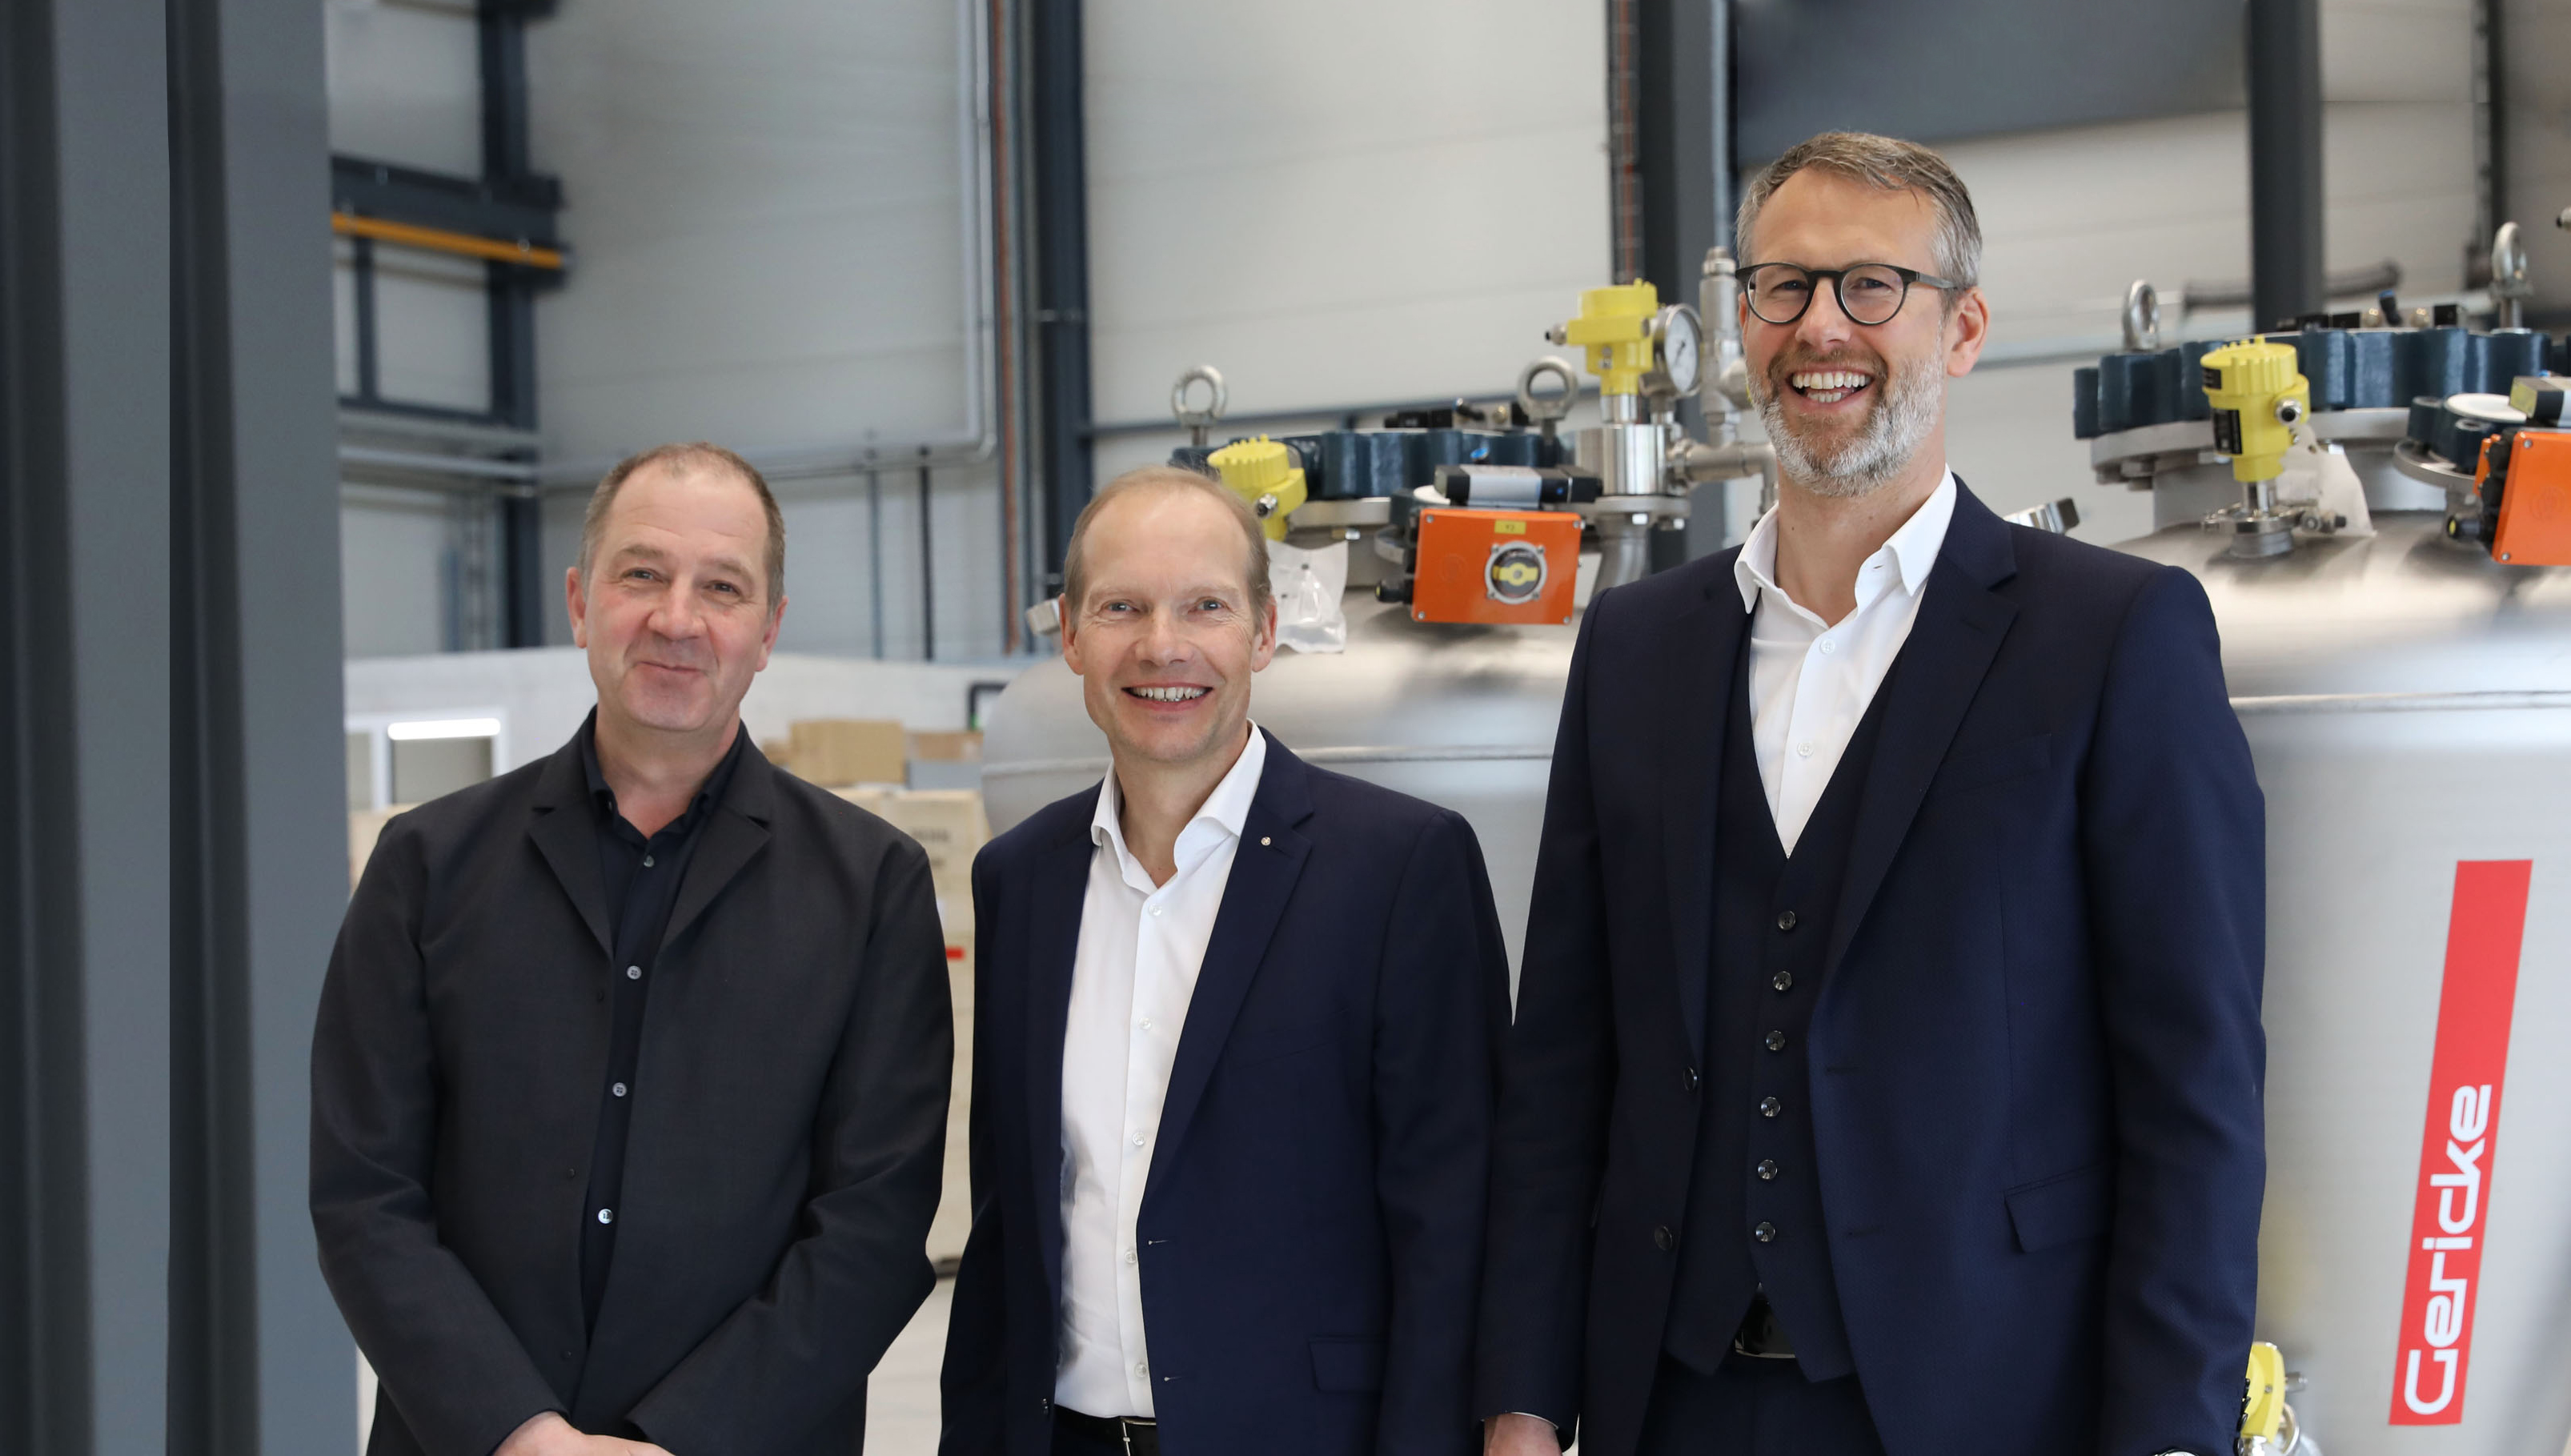 F.l.t.r.: Dr. Ralf Weinekötter (Managing Director Gericke AG) | Markus H. Gericke (CEO Gericke Group) | Thomas Schlumpf (CFO Gericke Group)